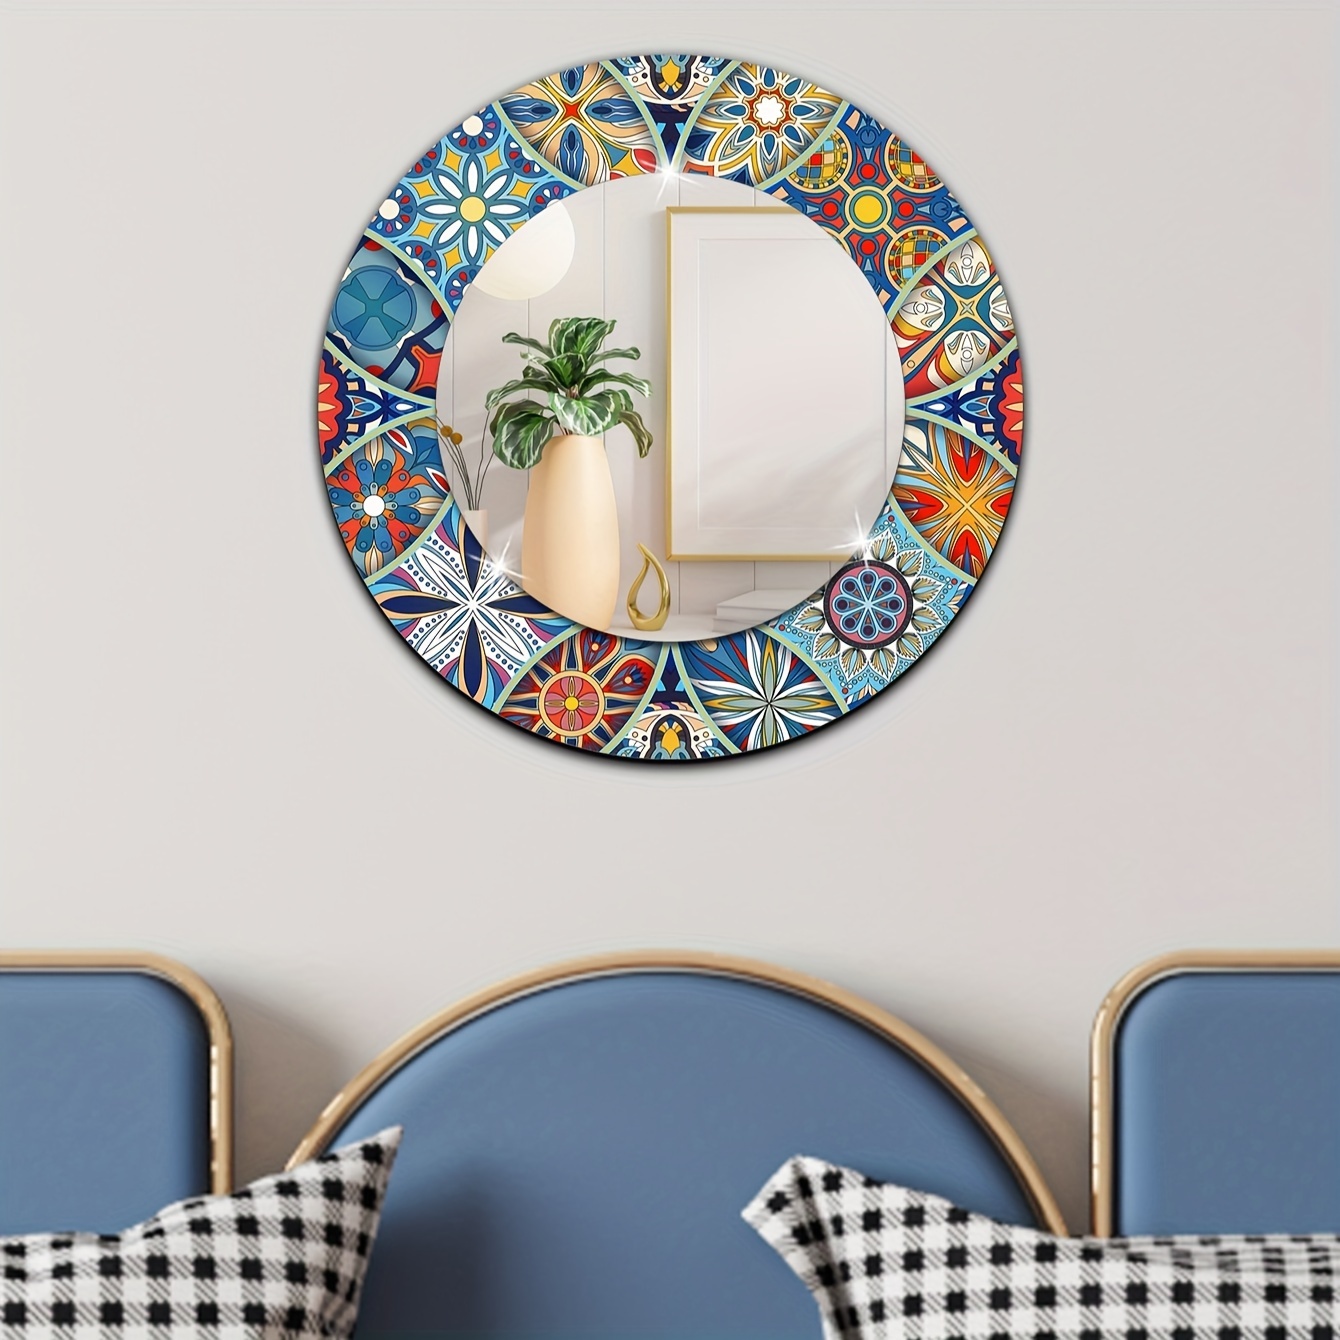 neukids Wallpaper Trim Wall Borders Frame for Bathroom Mirror